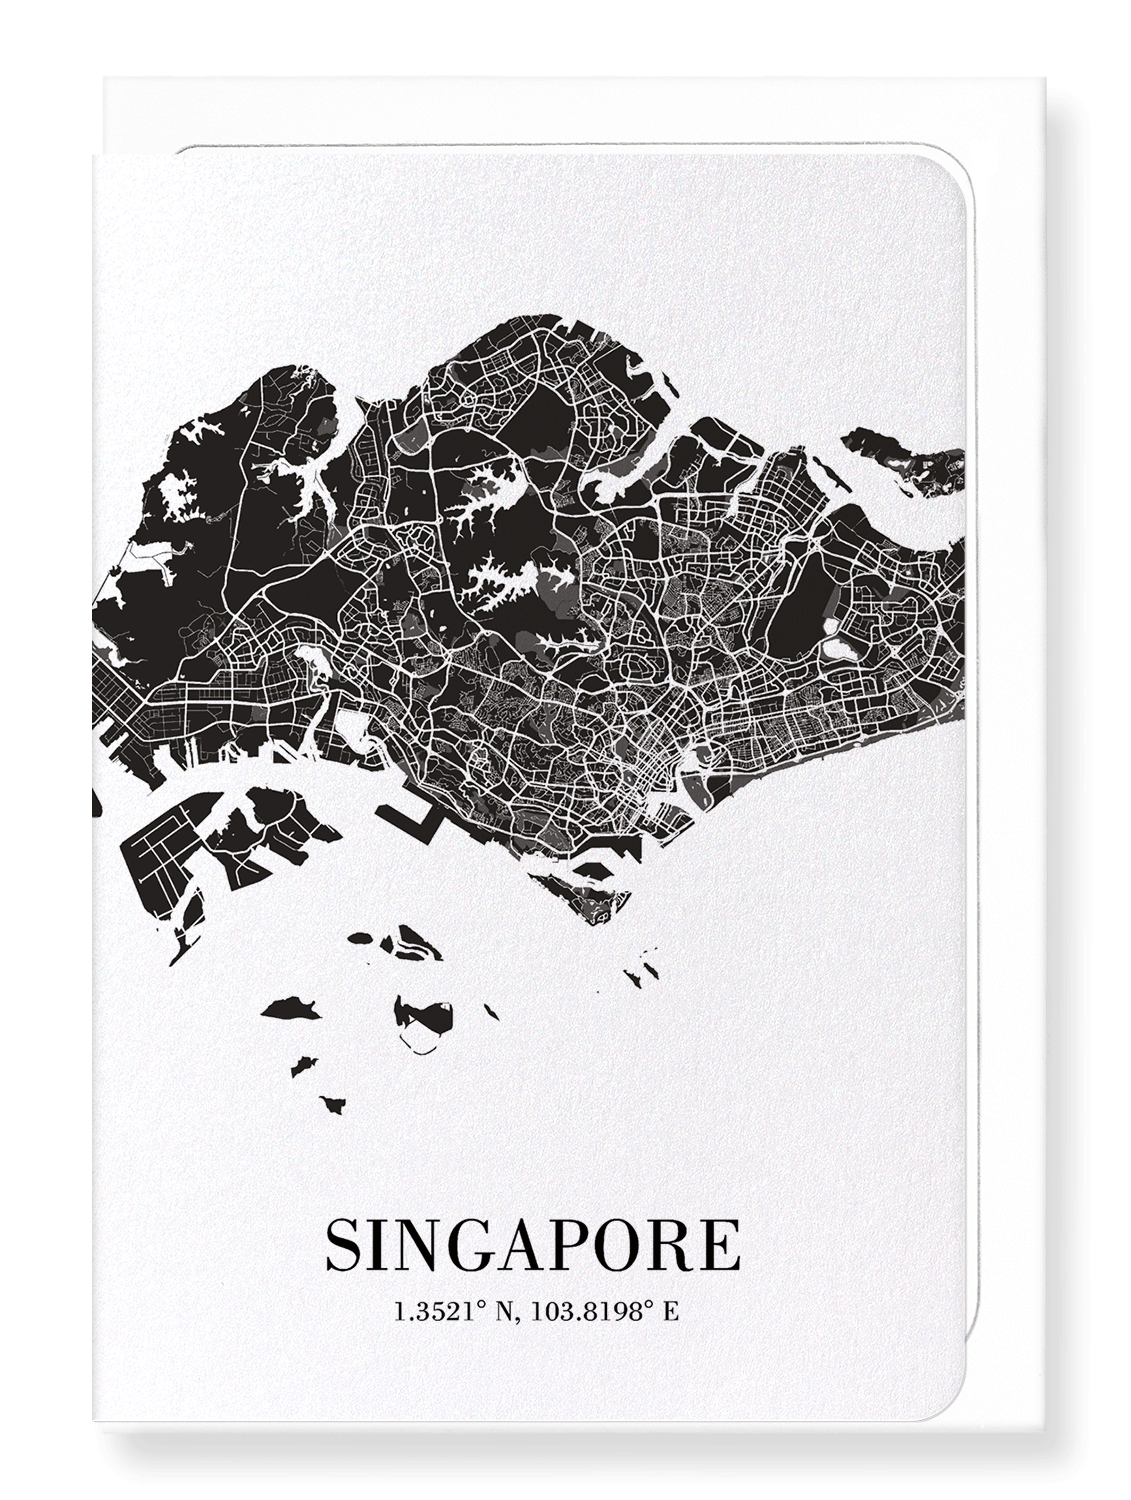 SINGAPORE CUTOUT: Map Cutout Greeting Card